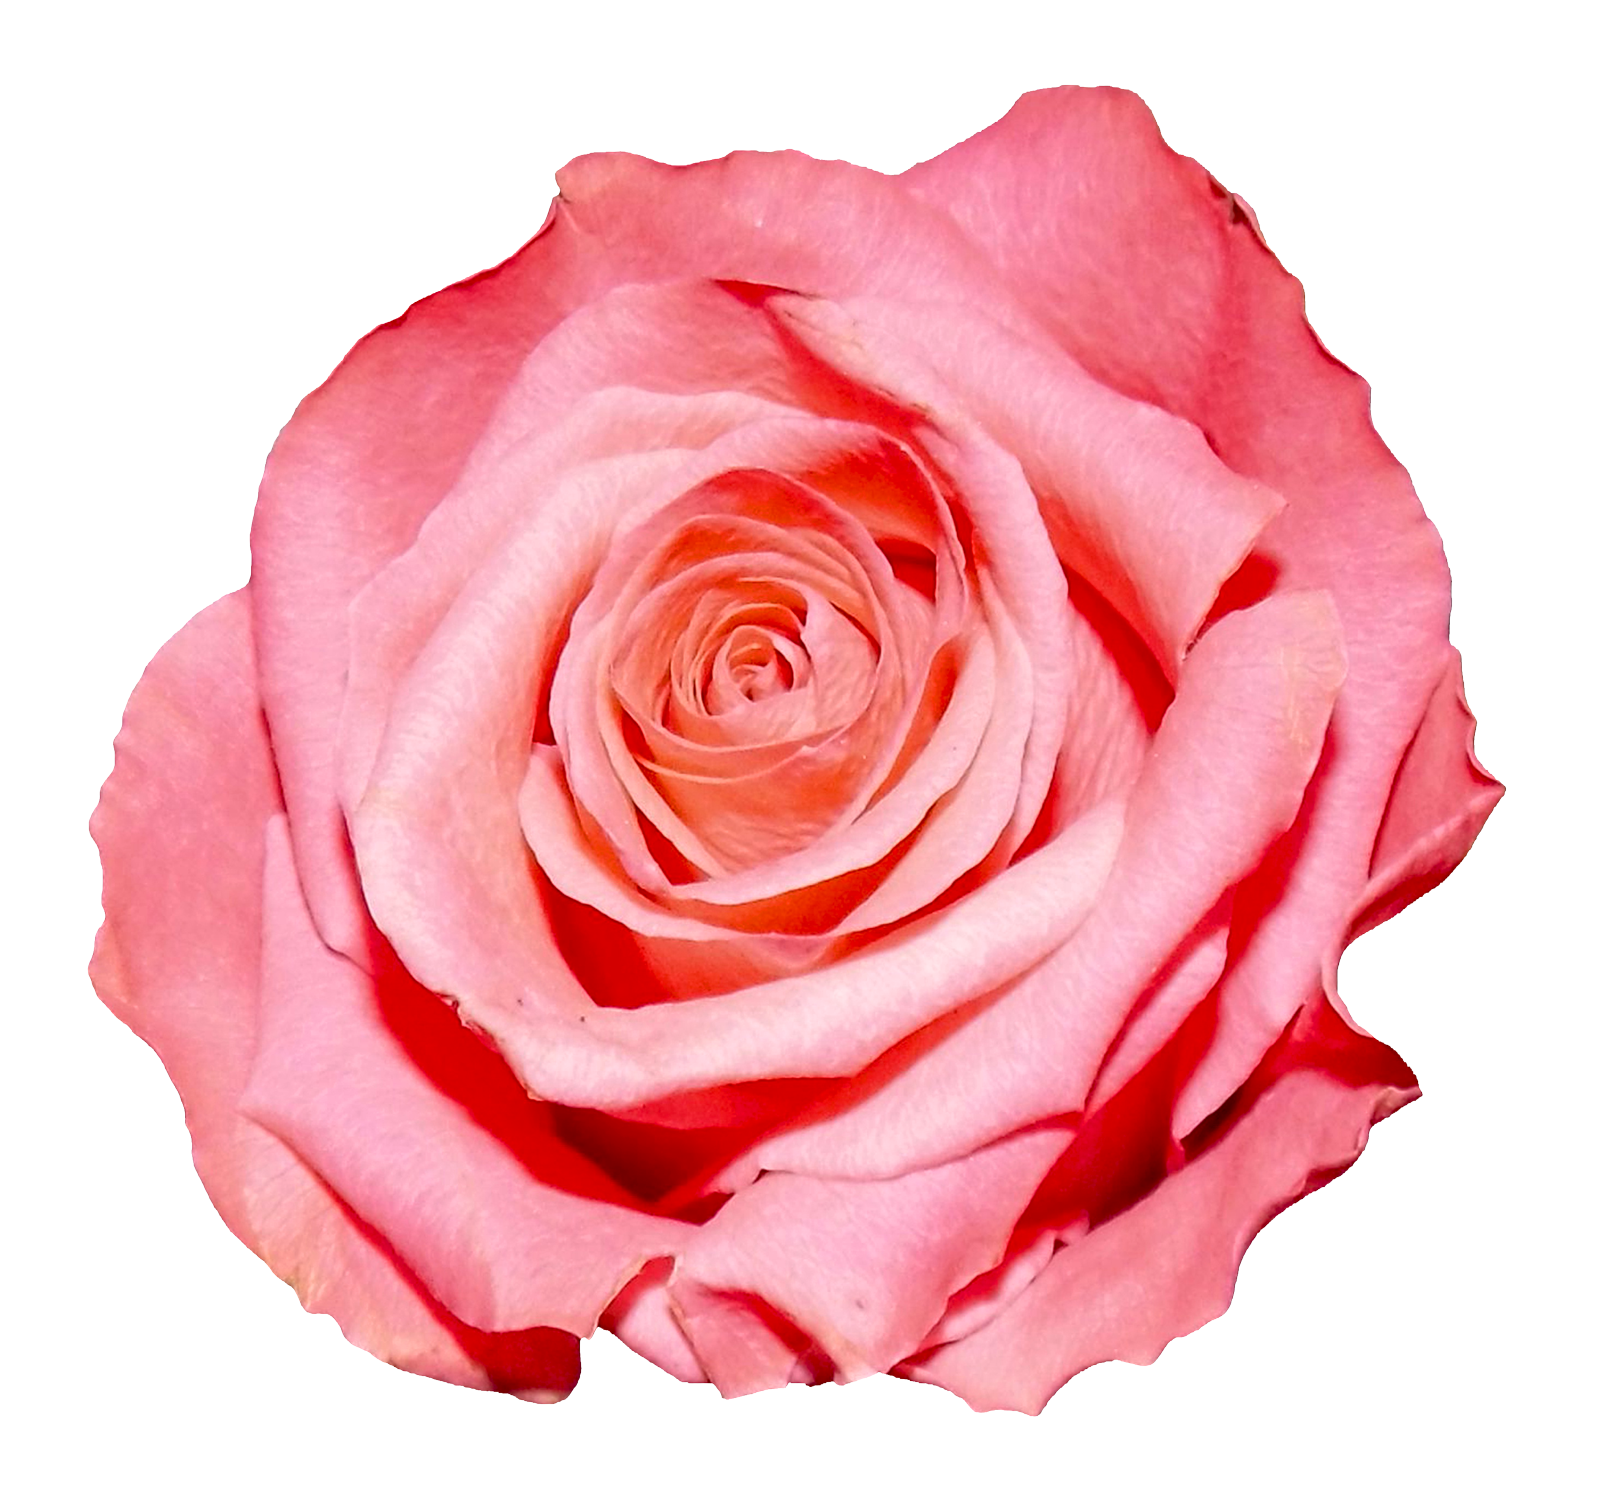 Rose Png Image - Rose, Transparent background PNG HD thumbnail